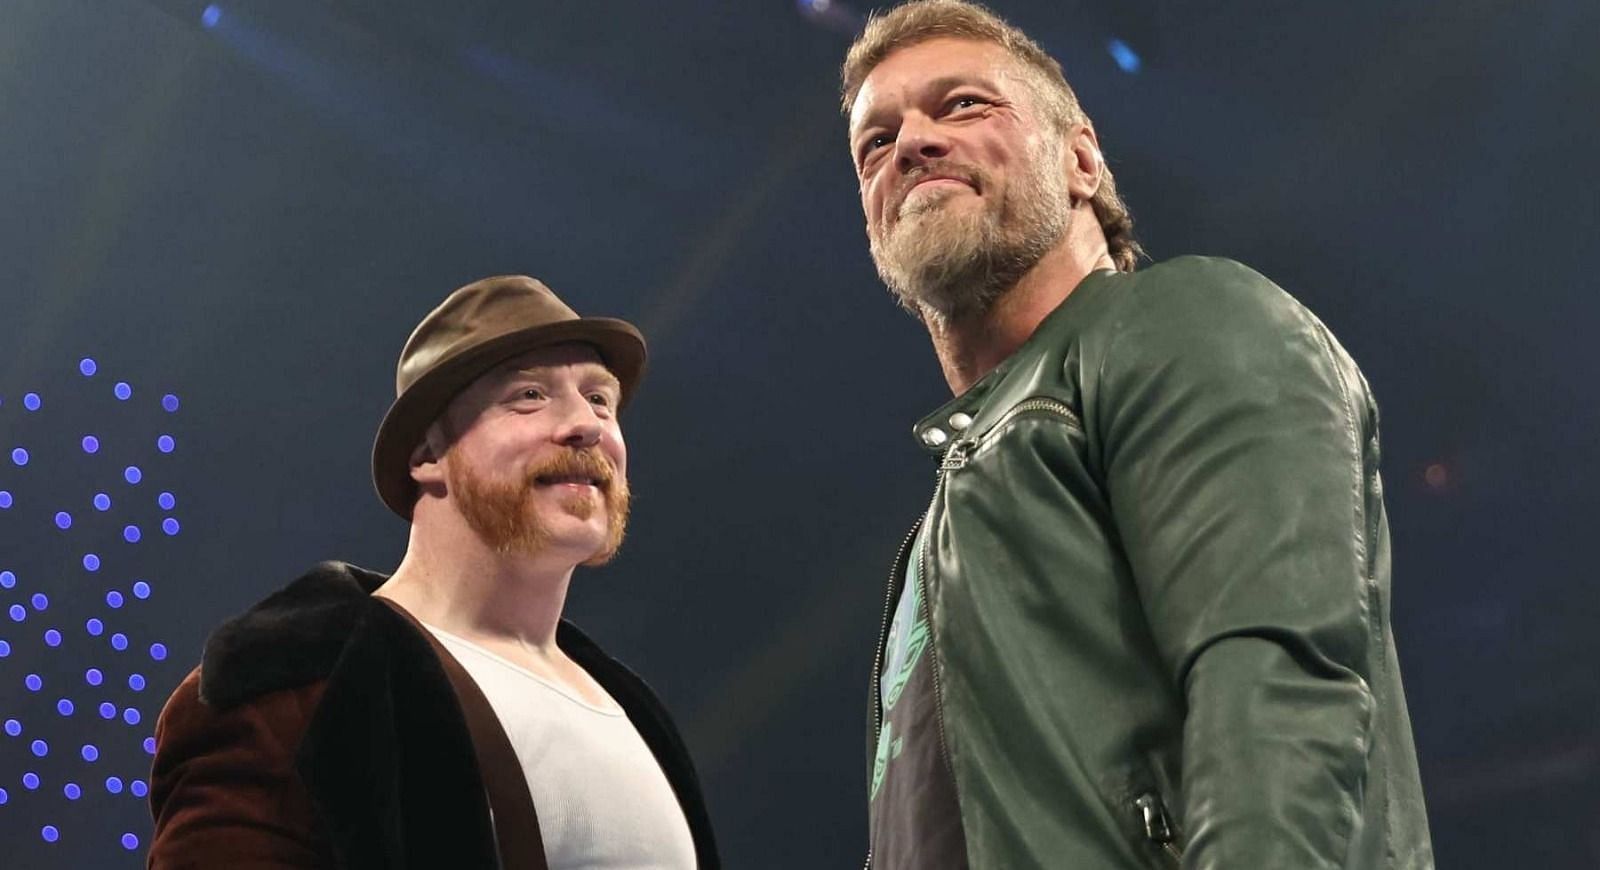 Edge wrestled his final WWE match against Sheamus